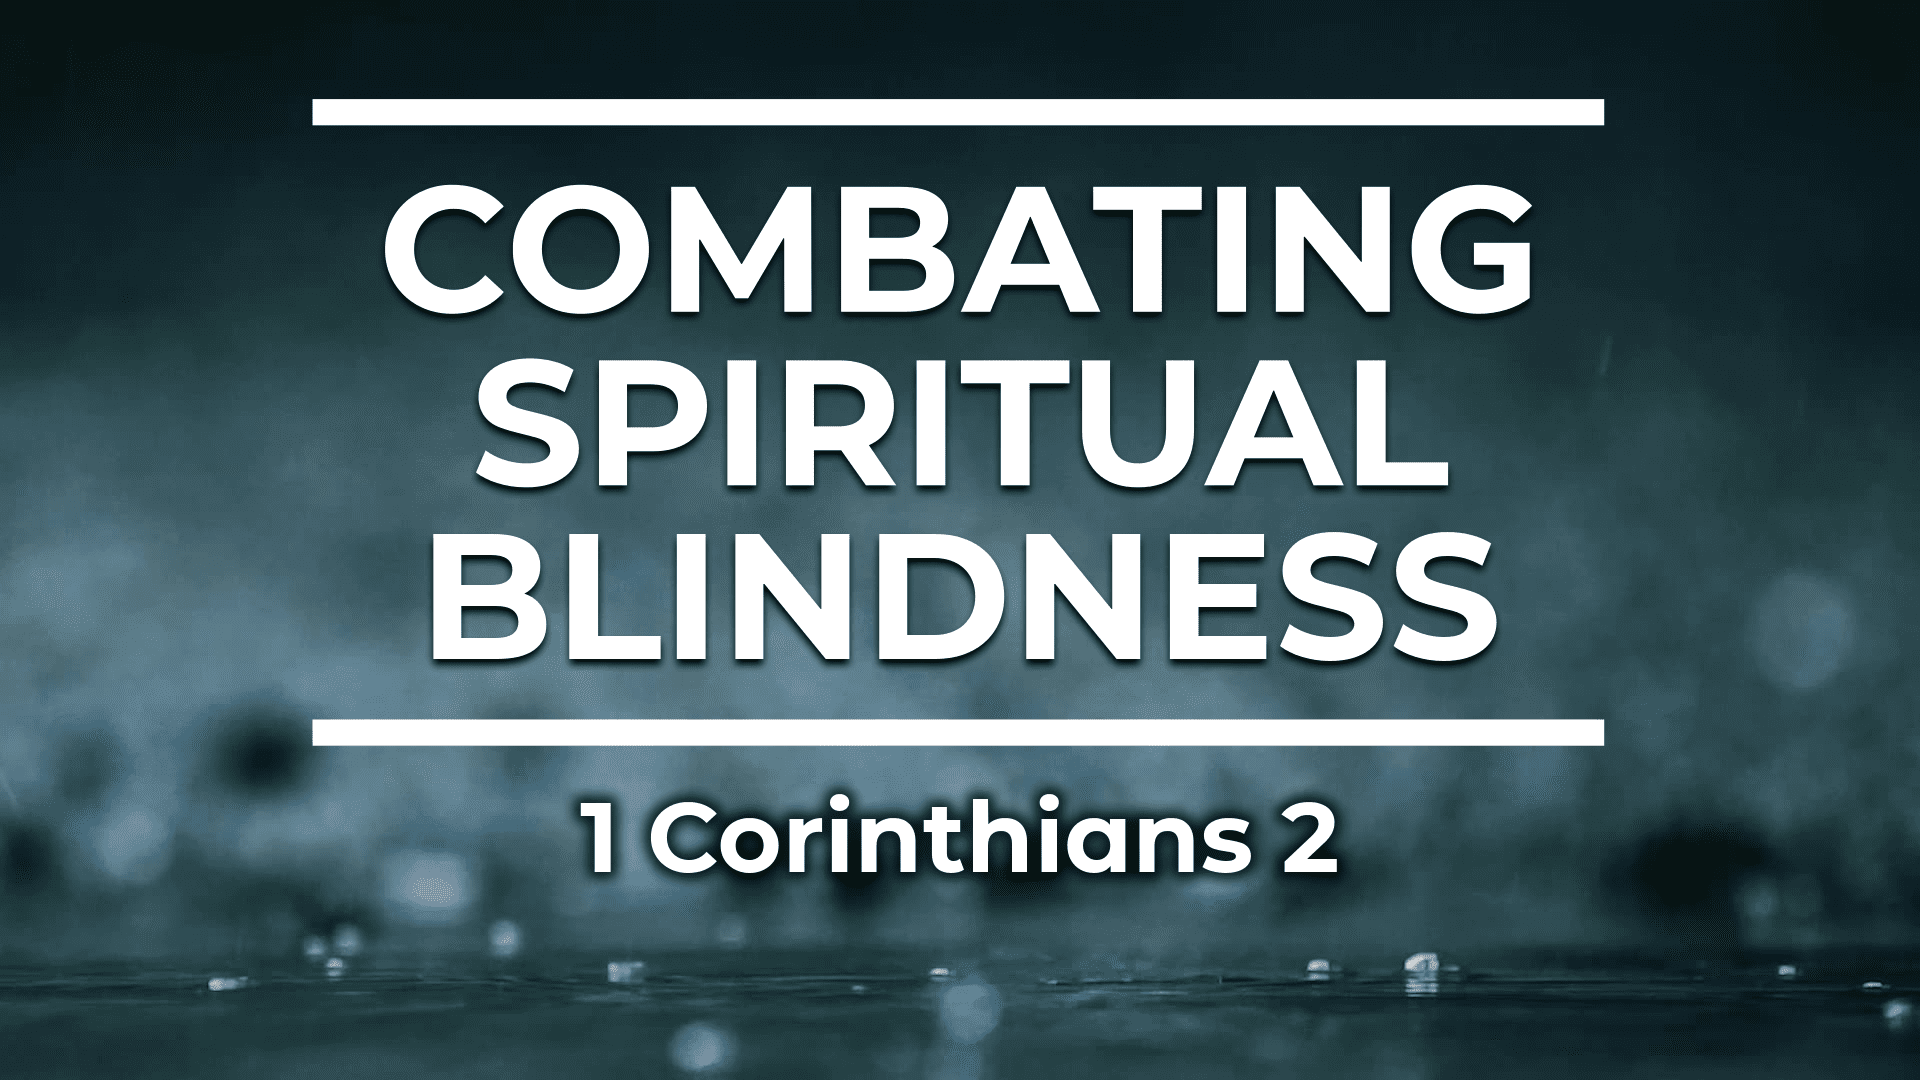 Combating Spiritual Blindness